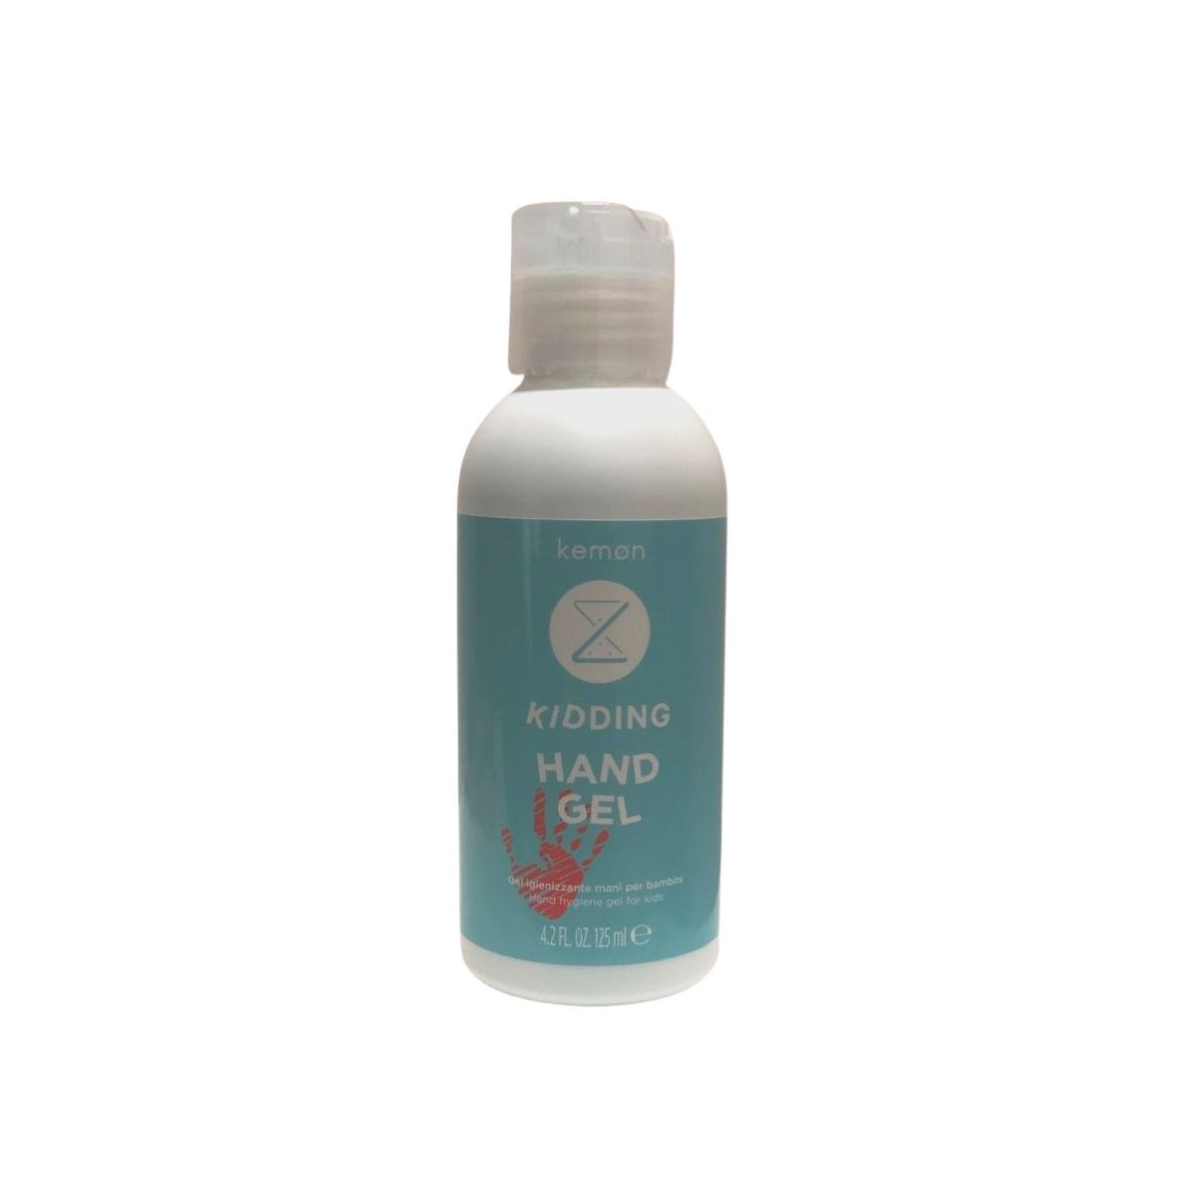 KEMON KIDDING HAND GEL (125ml) Gel igienizzante mani per bambini